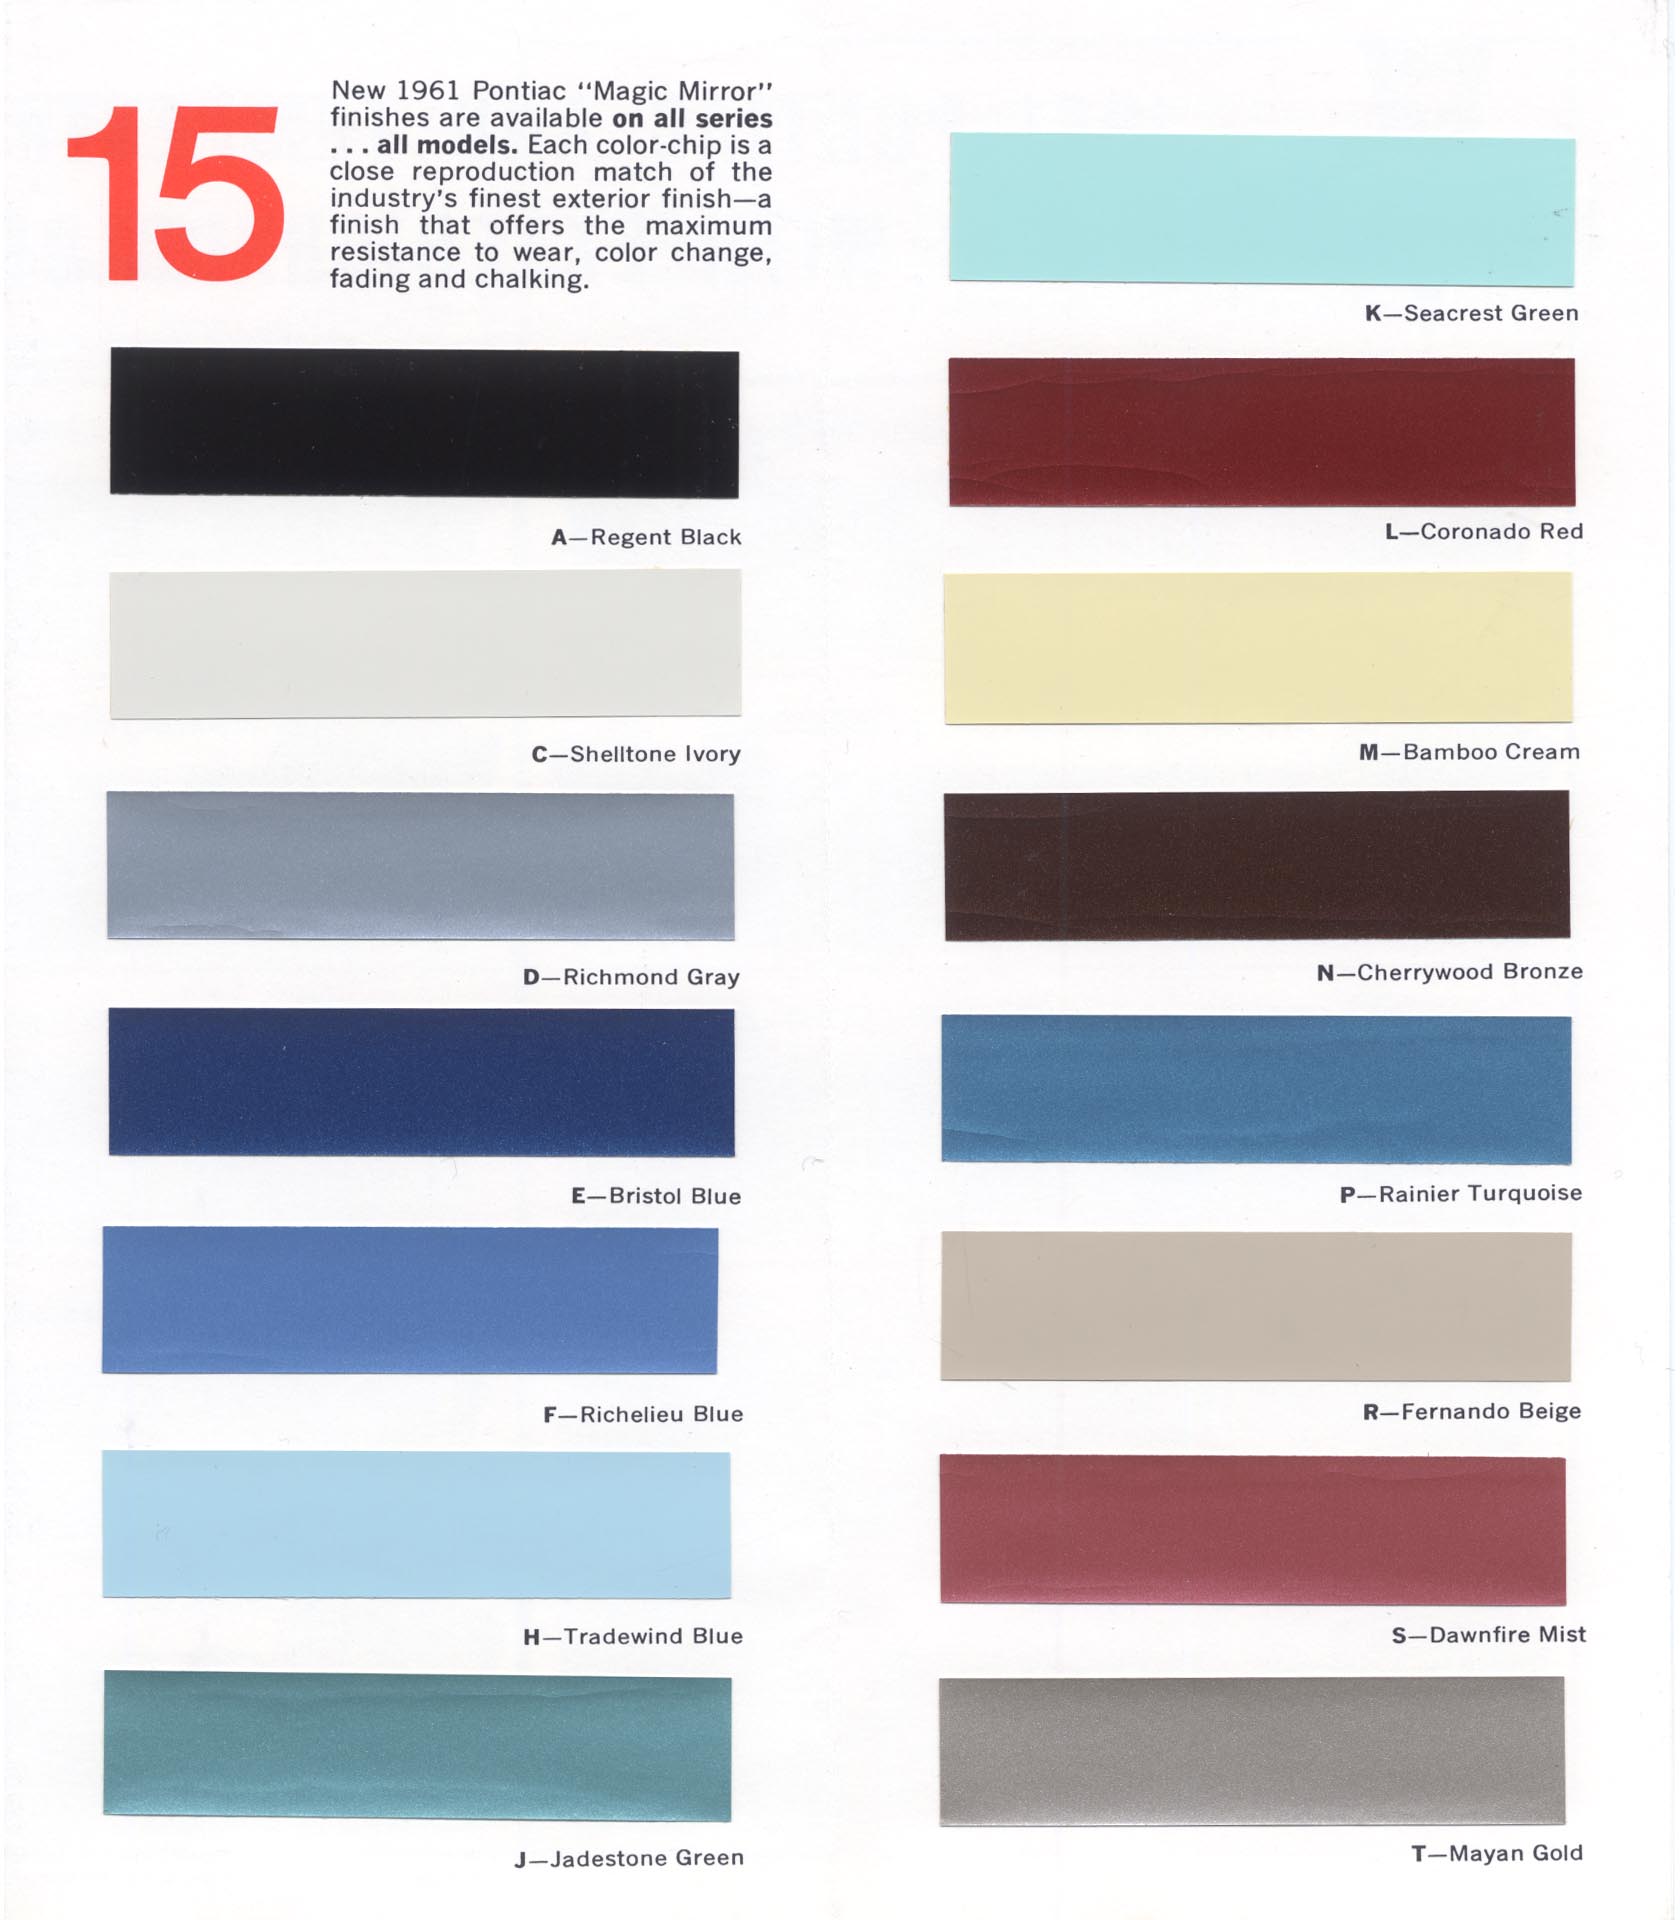 1961_Pontiac_Color_Chart-02